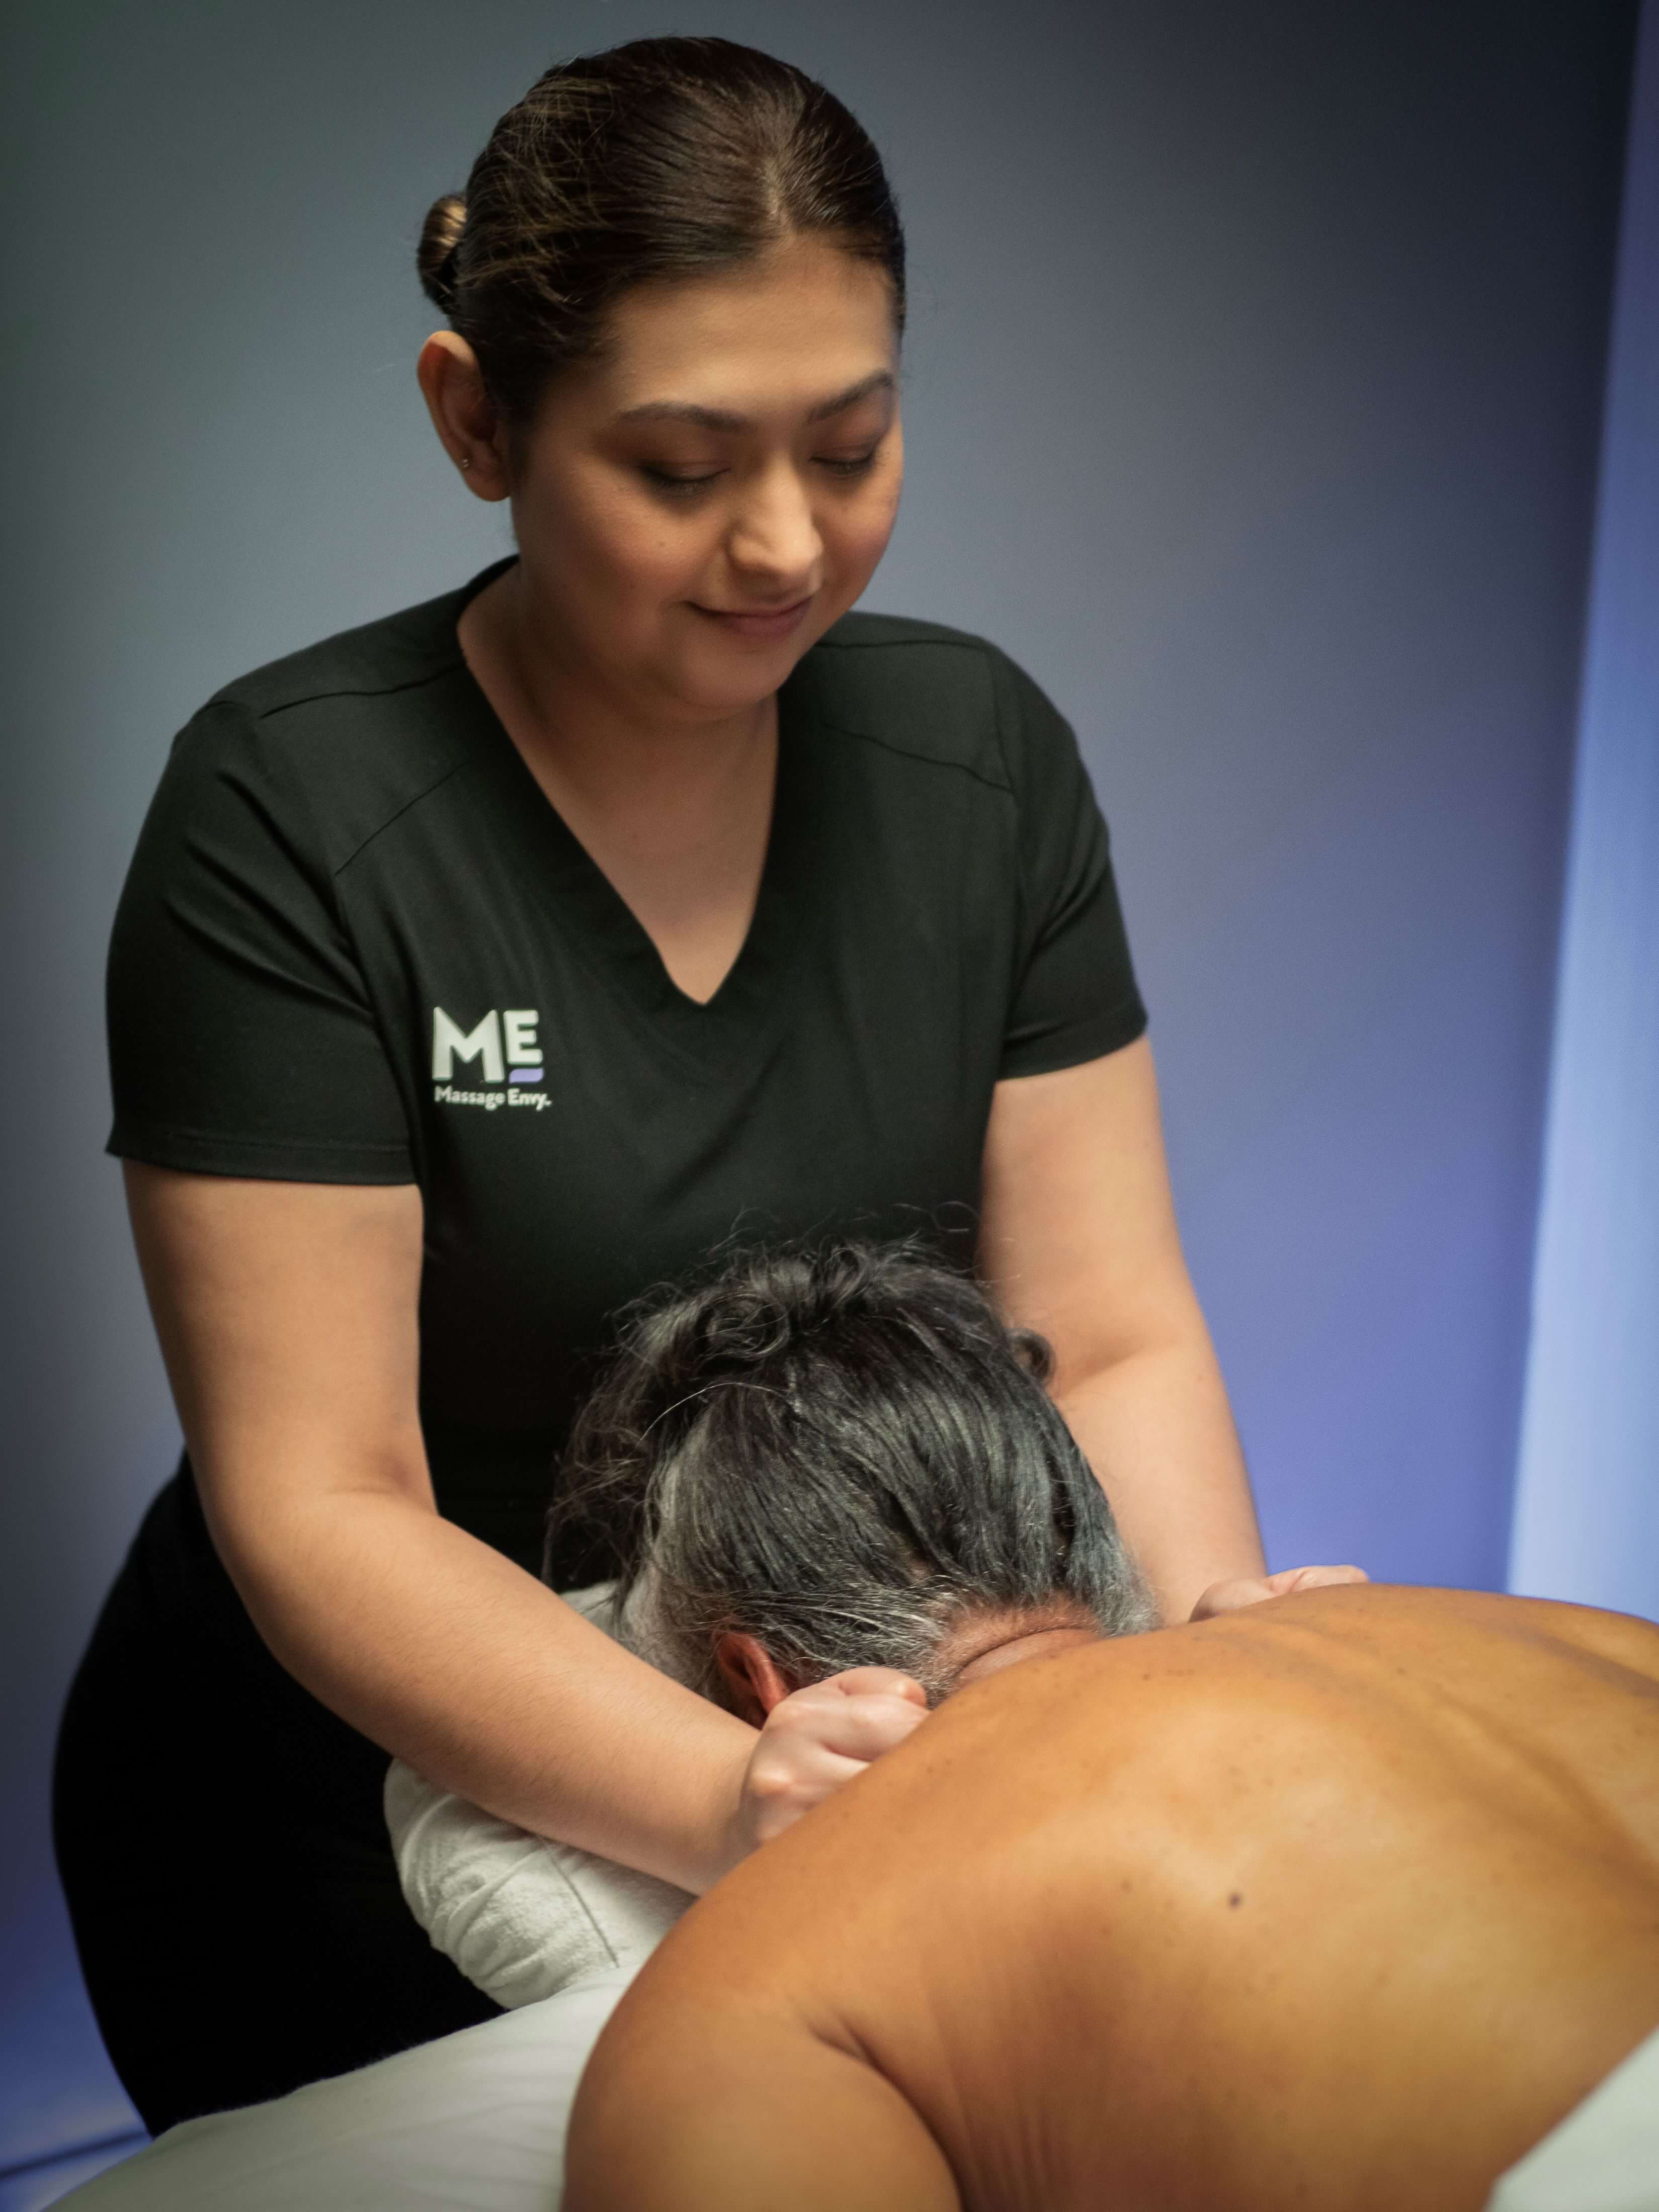 Massage Therapist Careers At Massage Envy Massage Envy Careers